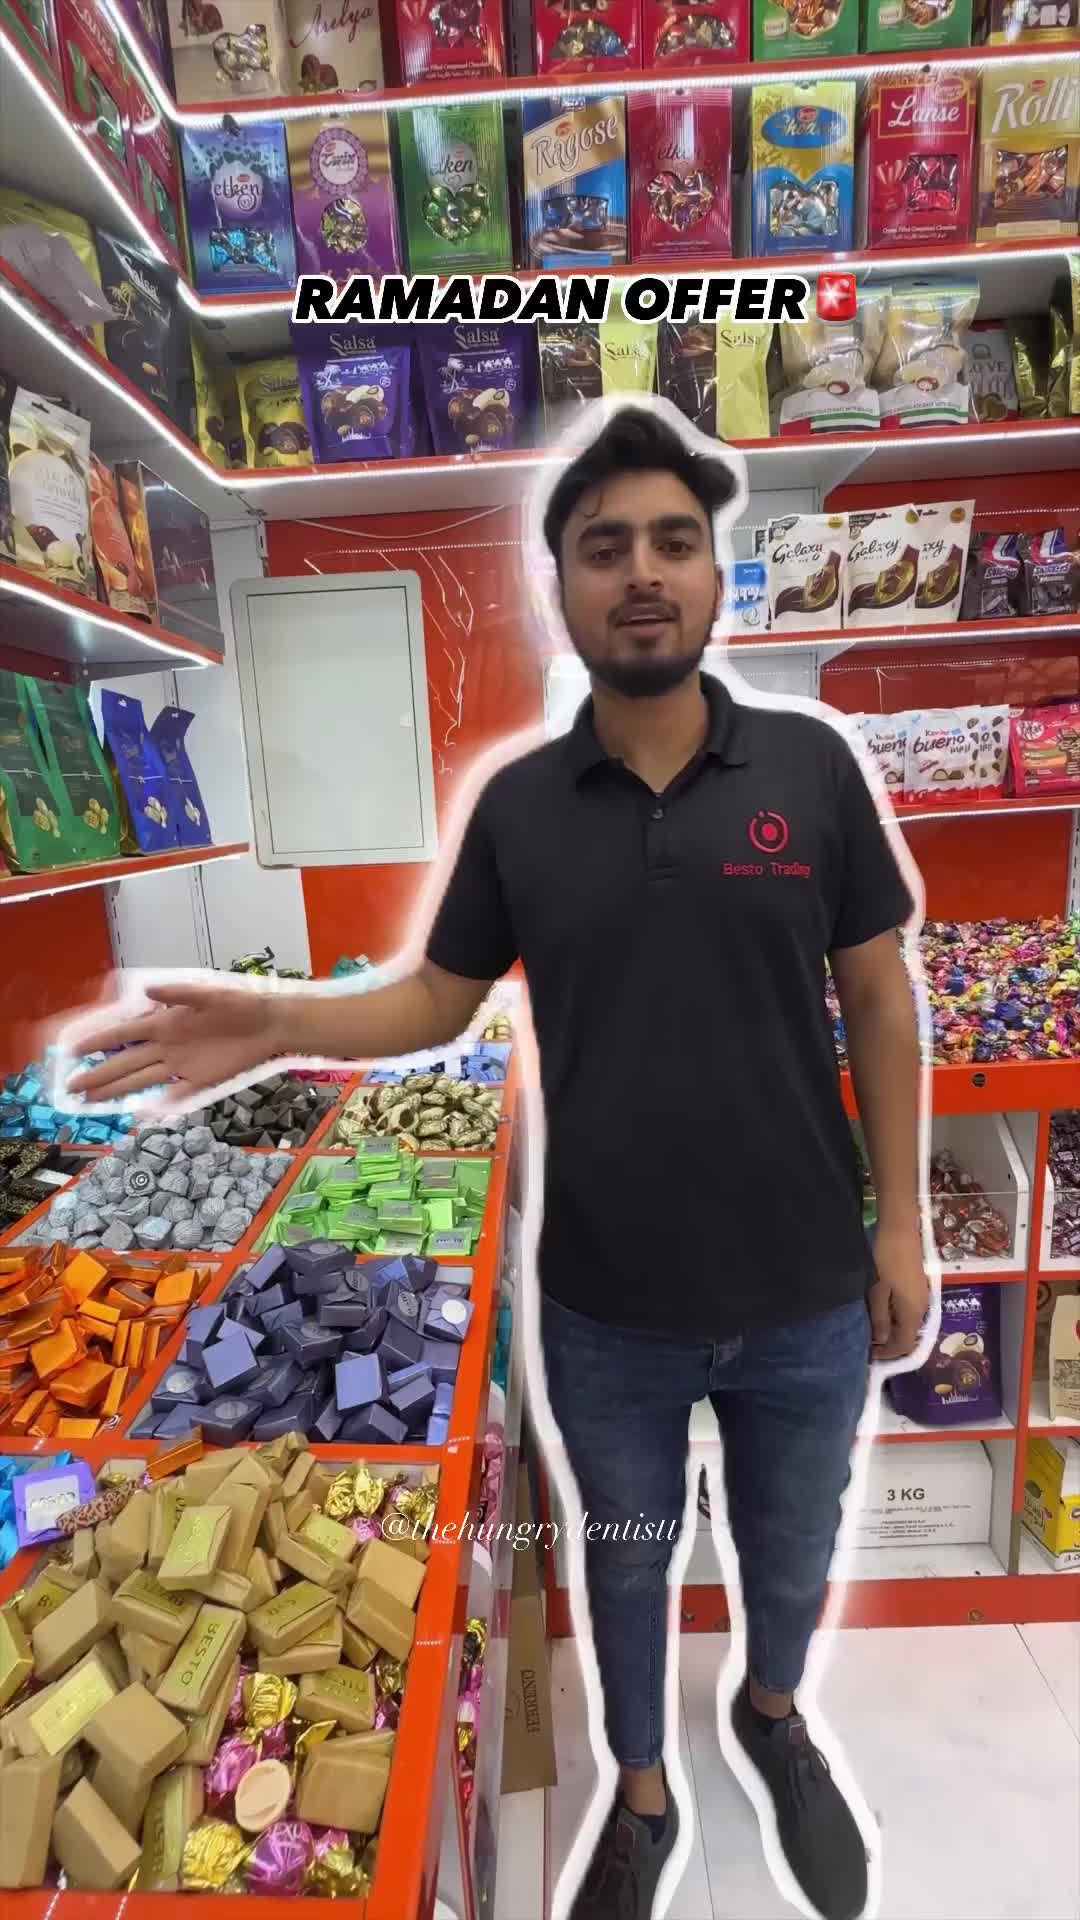 Ramadan Offer: Free Dates, Chocolates & Nuts in Dubai